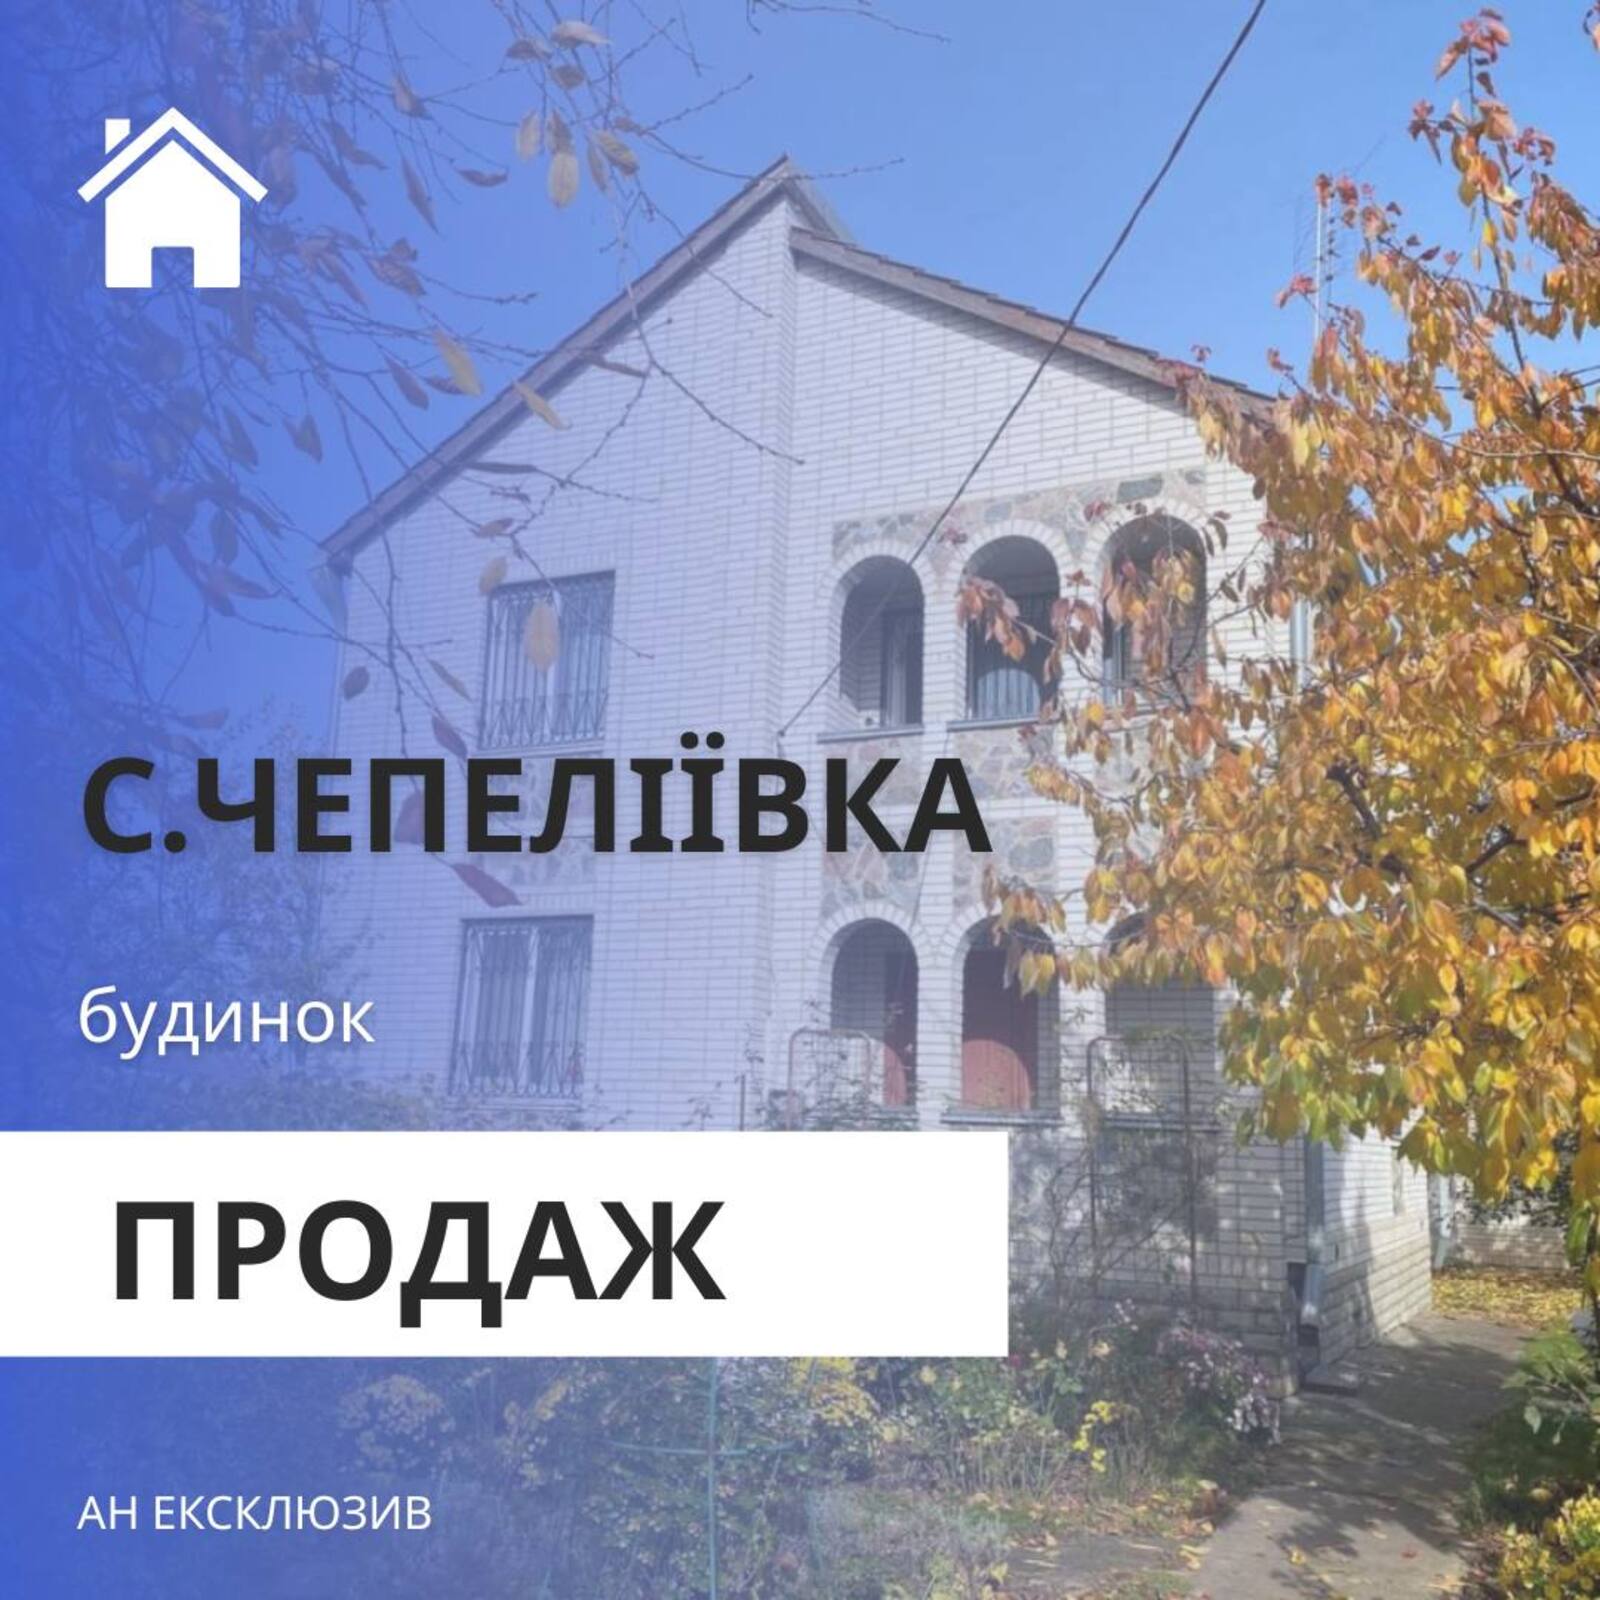 Продажа домов Чепилеевка